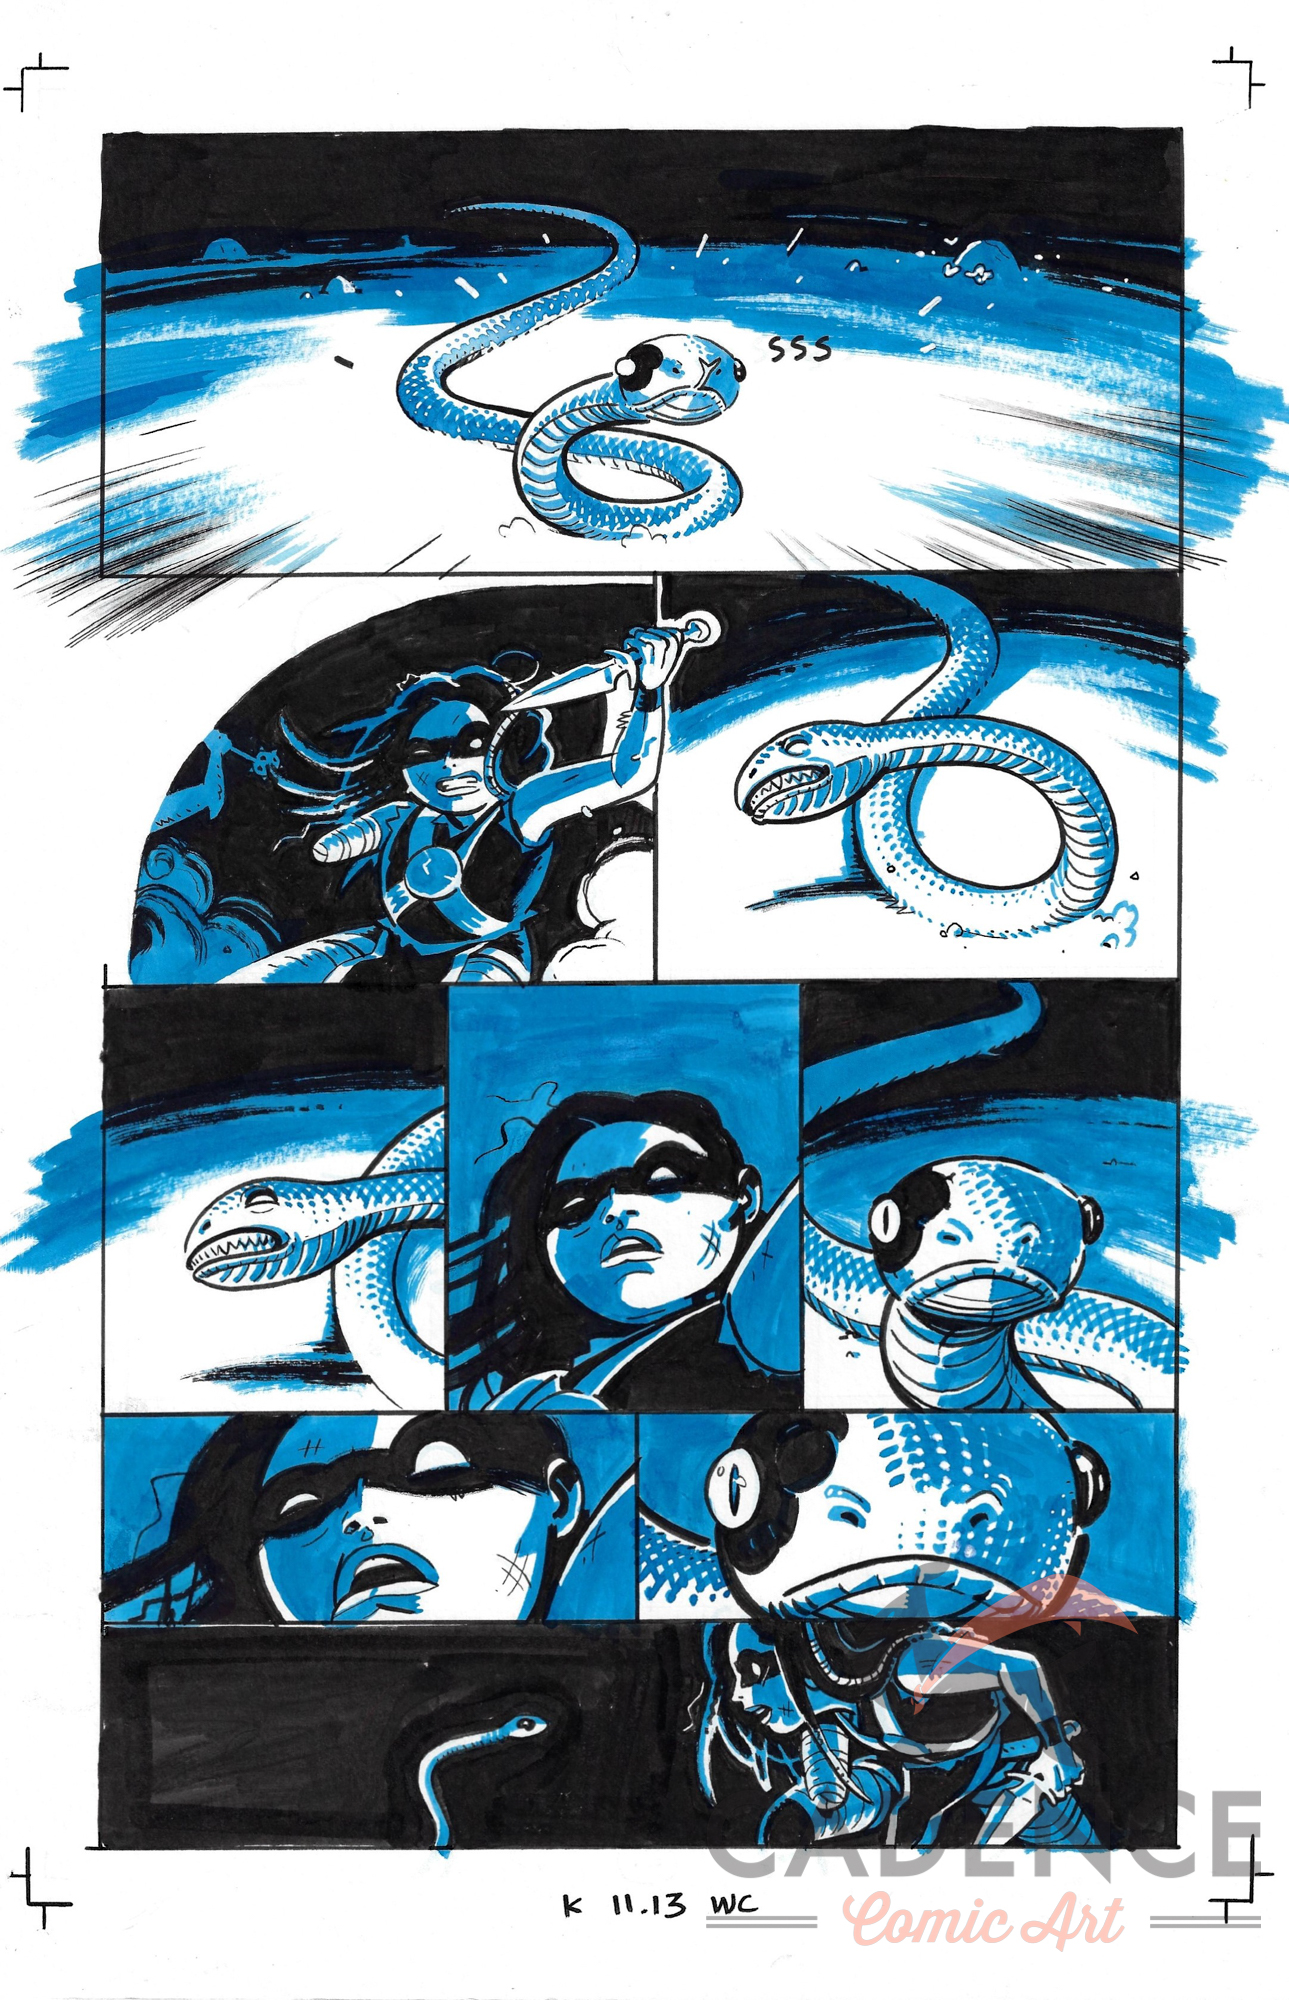 Image of Kaya (Image Comics), Issue 11, Page 13